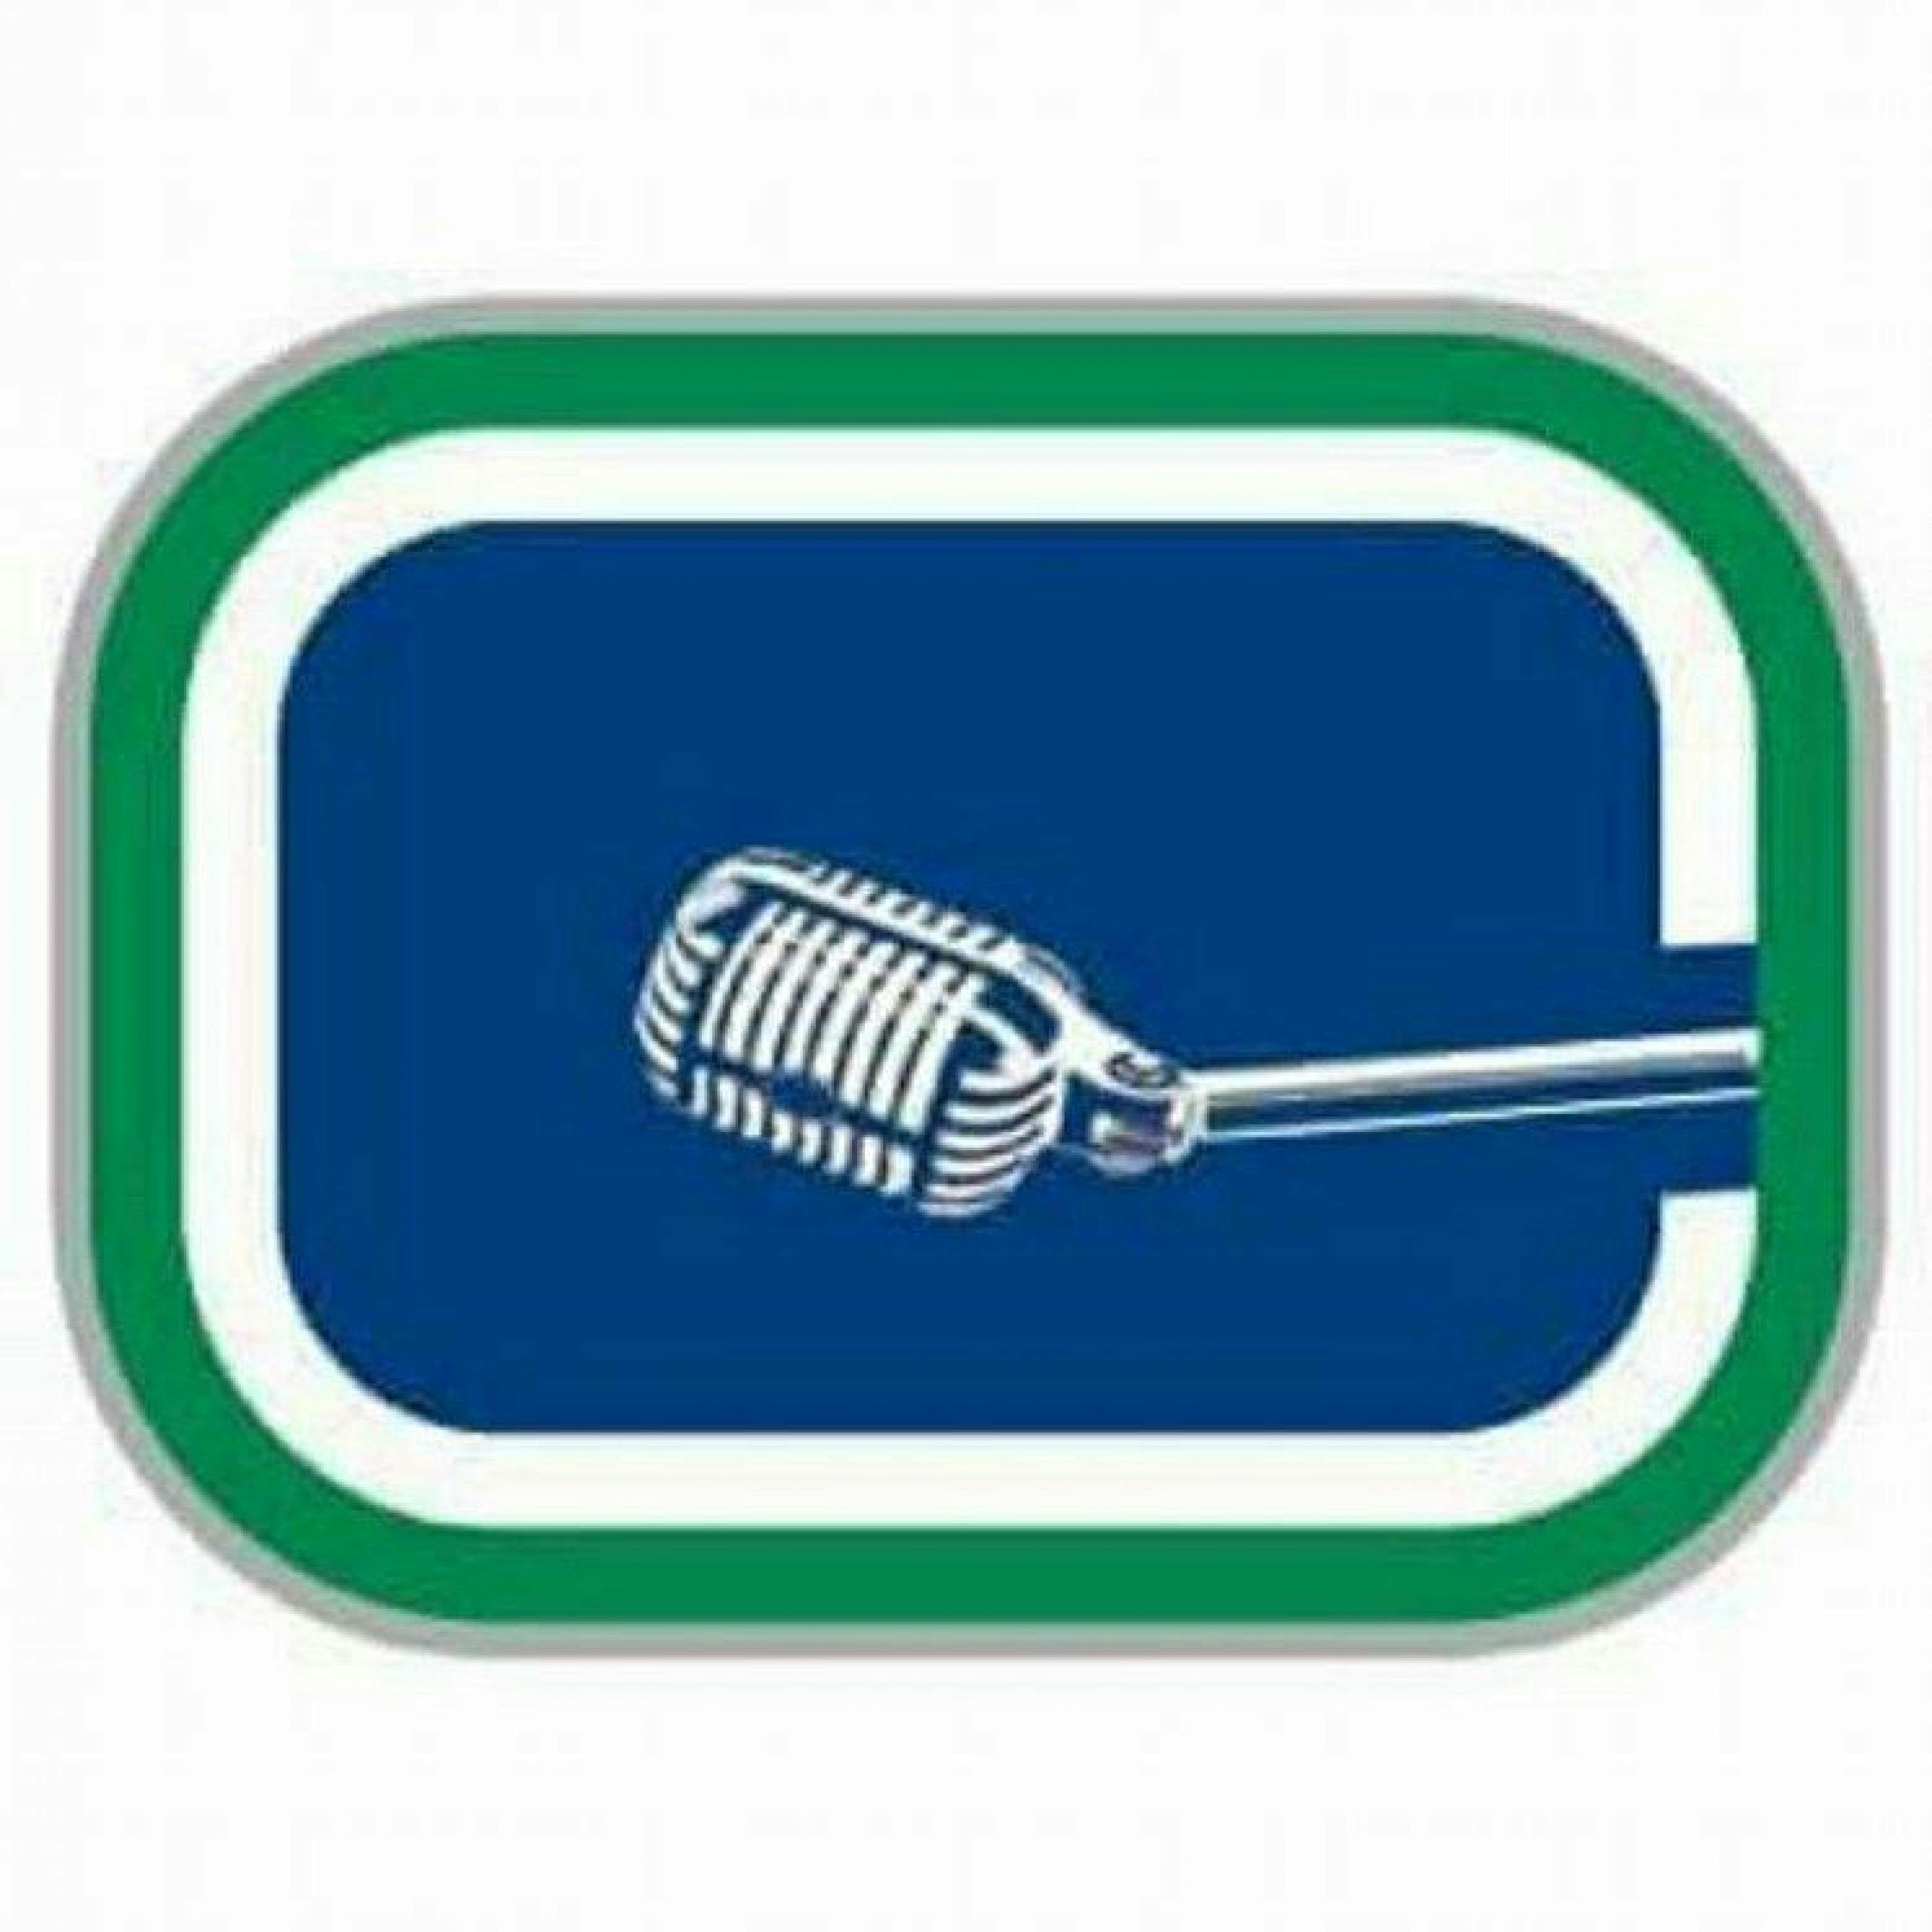 Vancouver Canucks - StickinRink Podcast - EP68 - S1